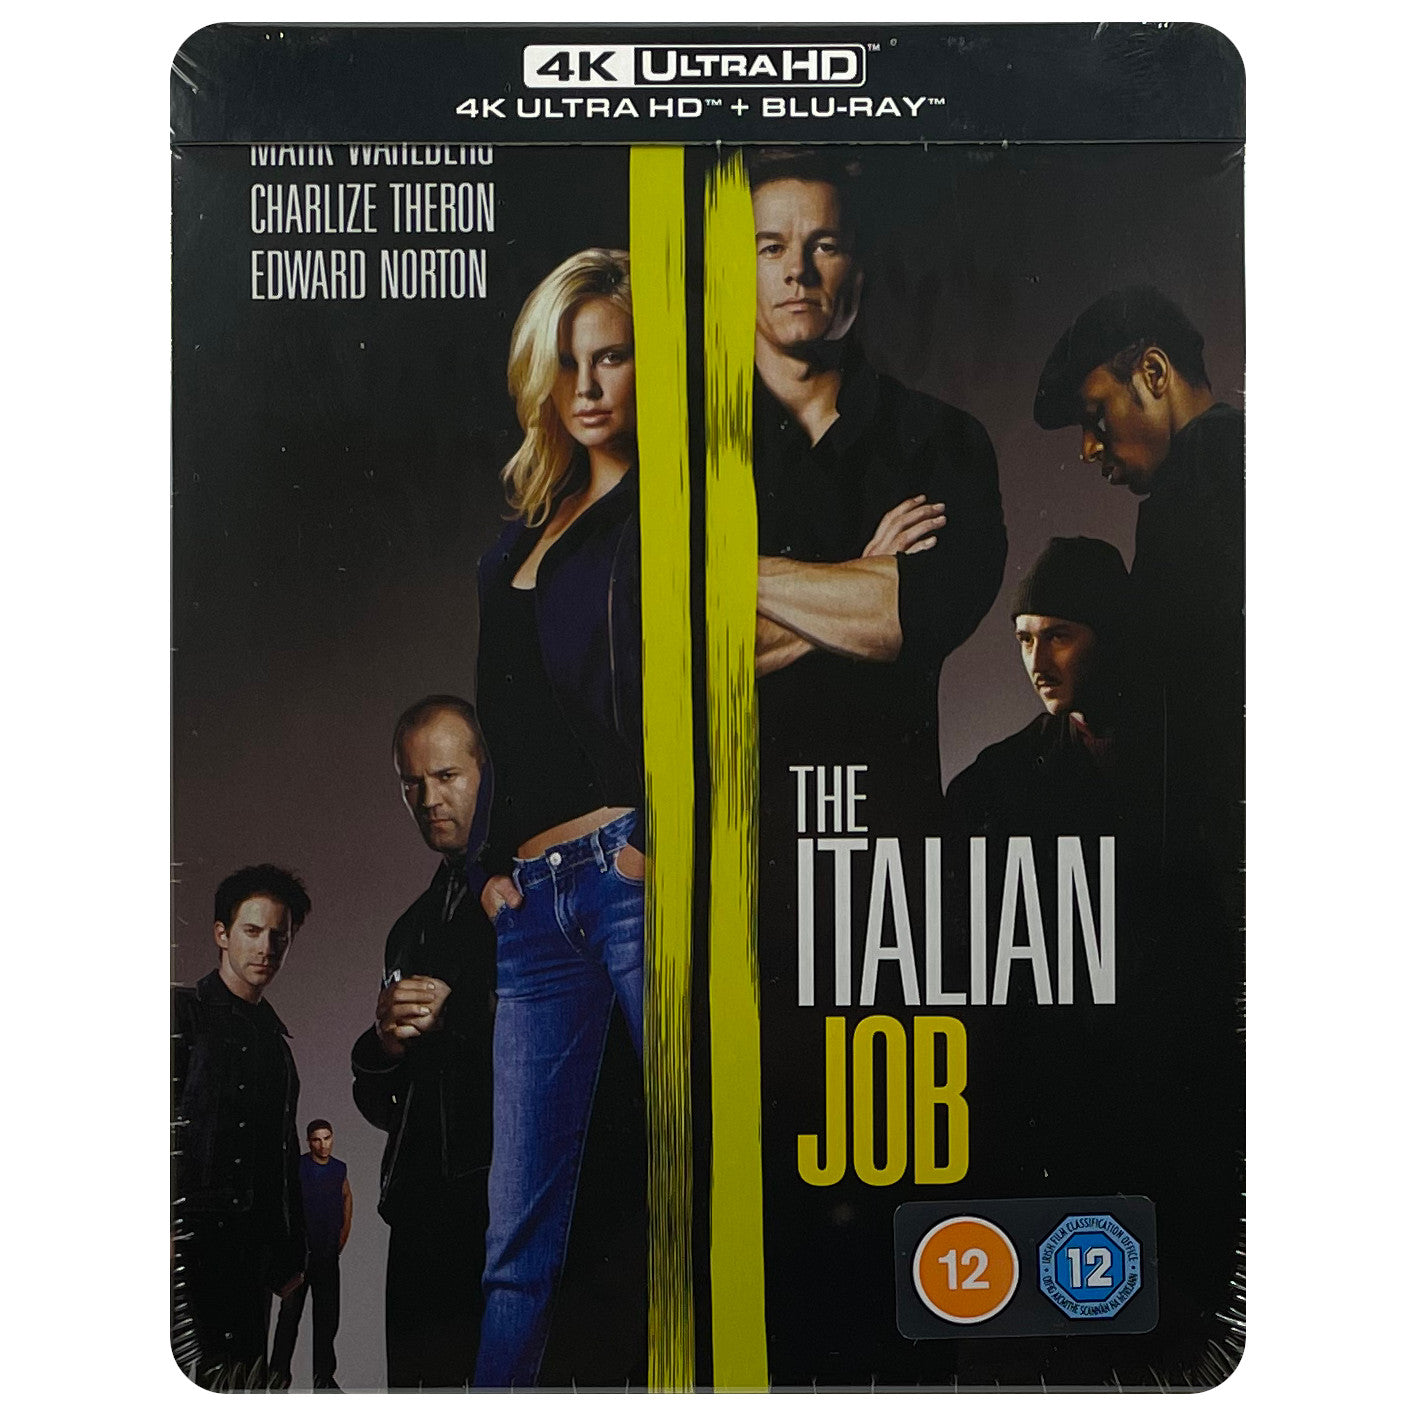 The Italian Job 4K Steelbook